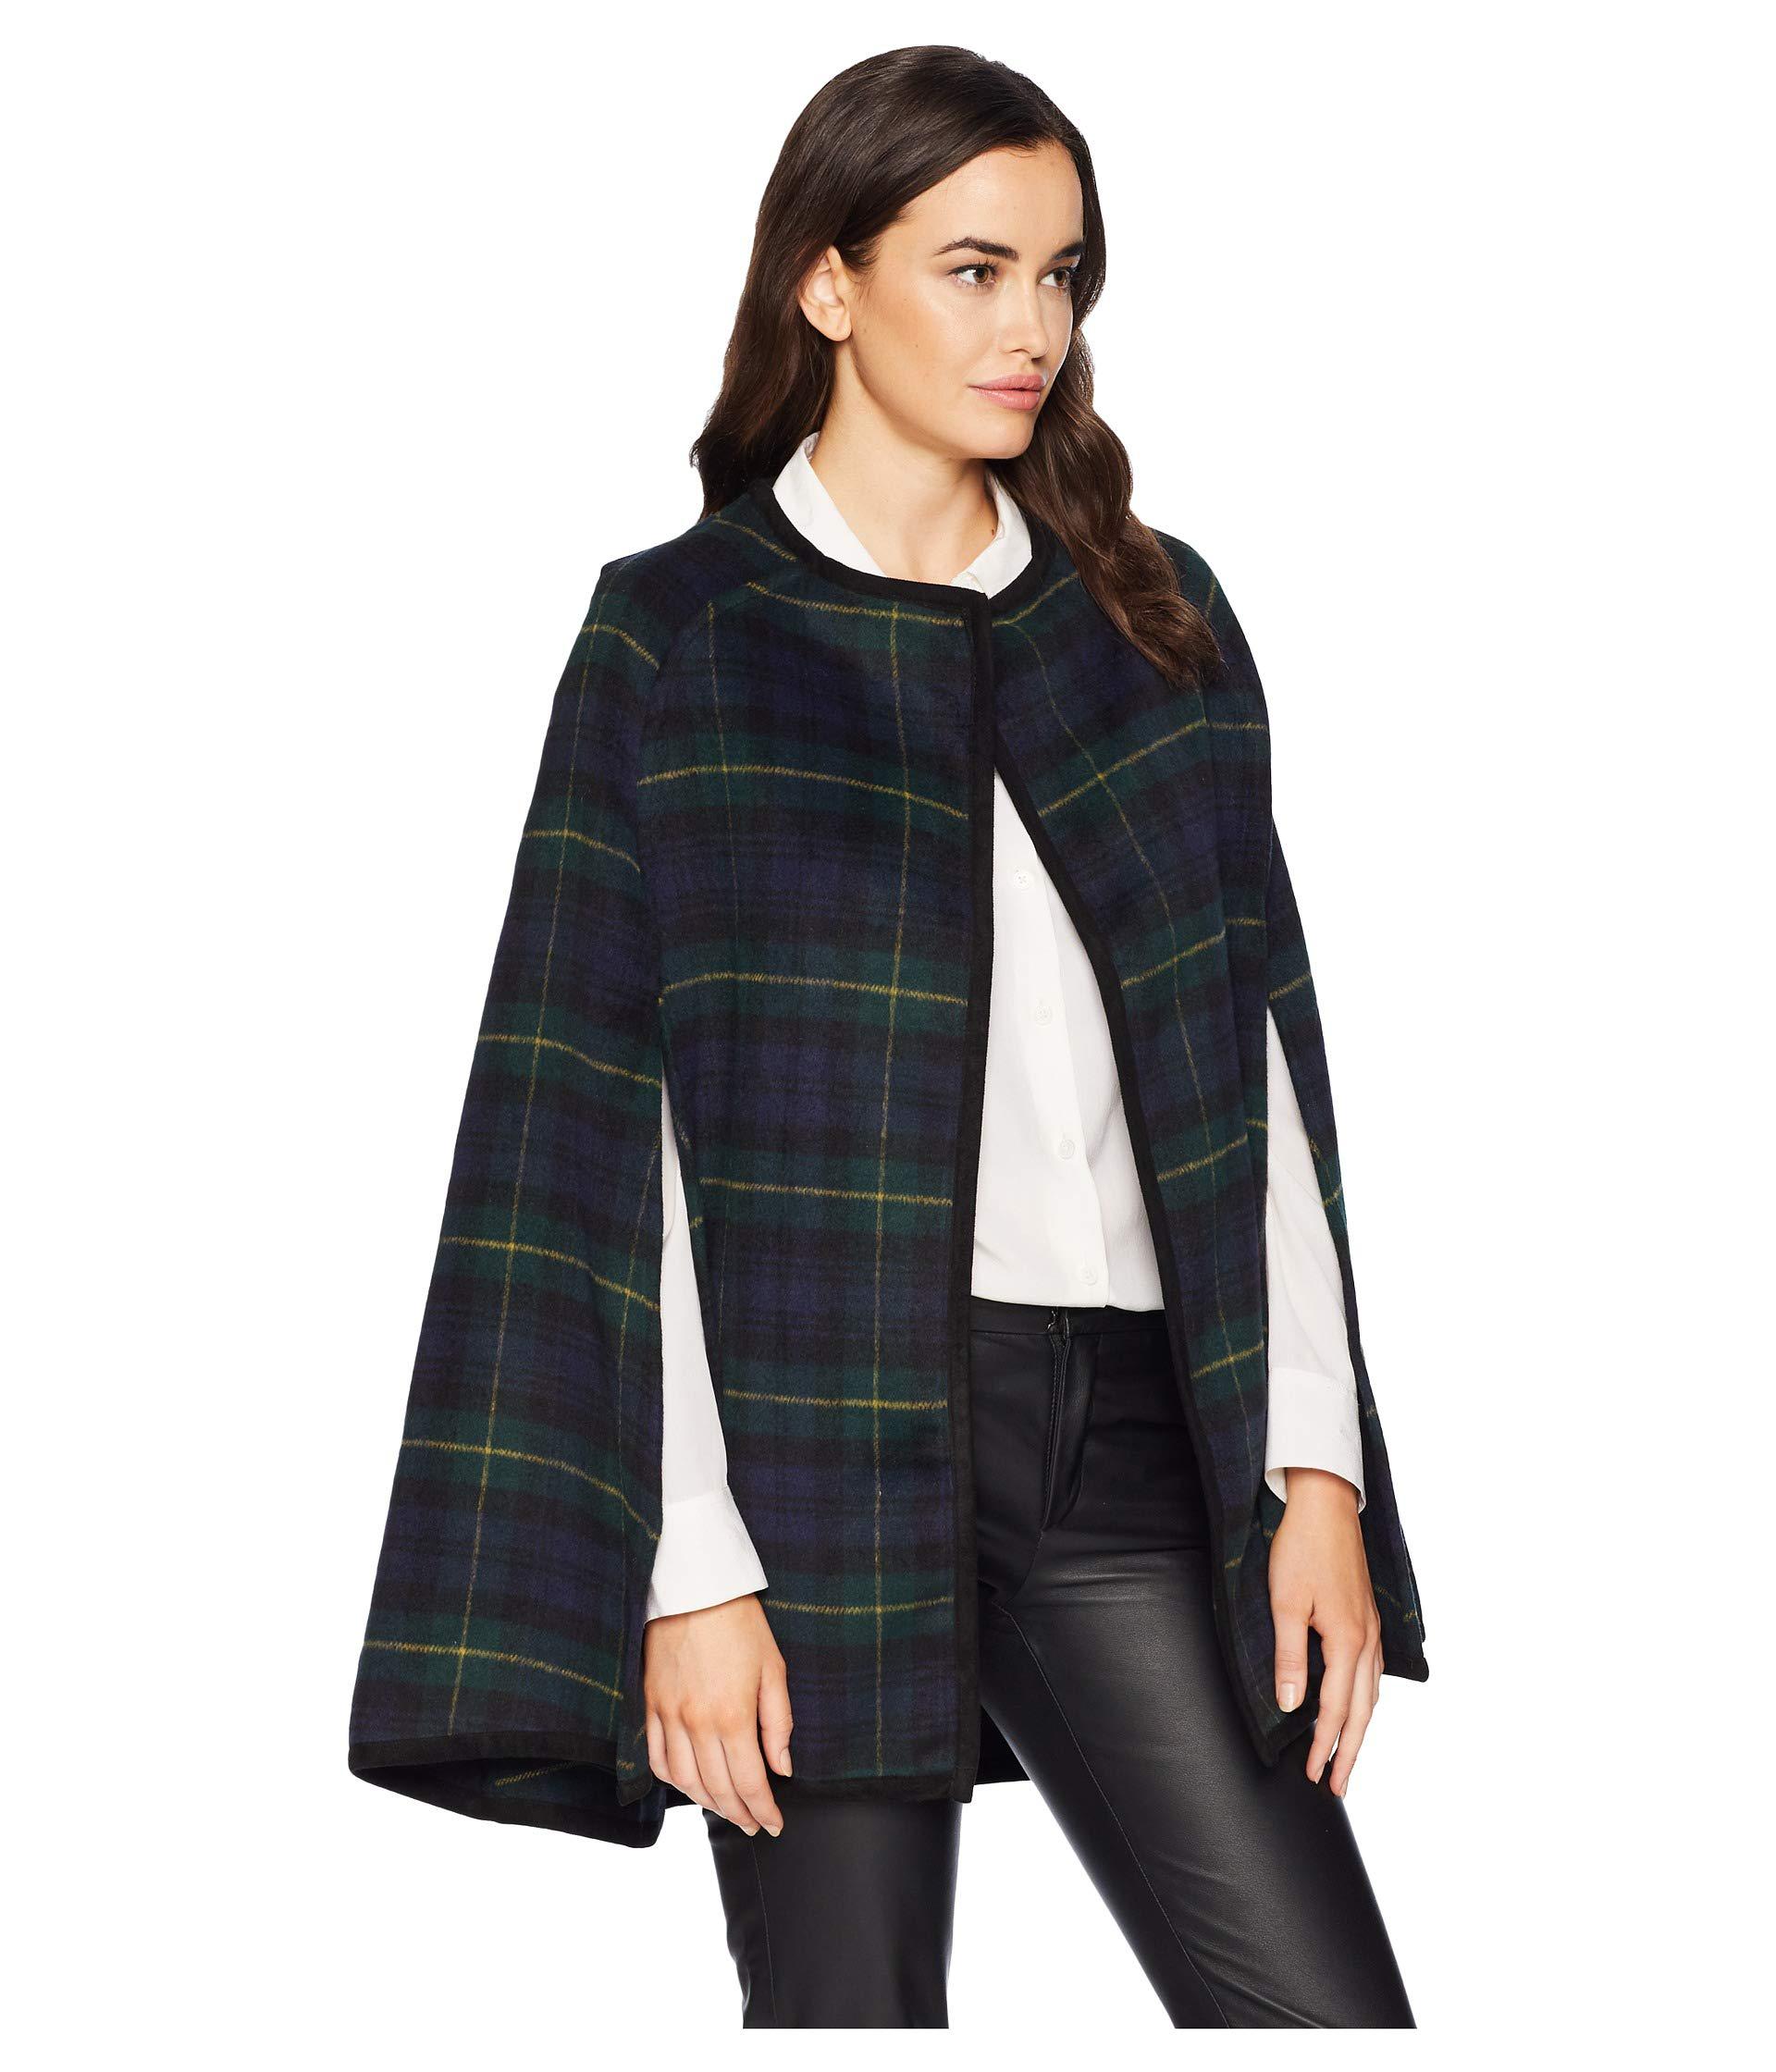 Becky Park Vintage Ralph Lauren Black Watch Tartan Plaid 100% Wool Coat Women's Size 12